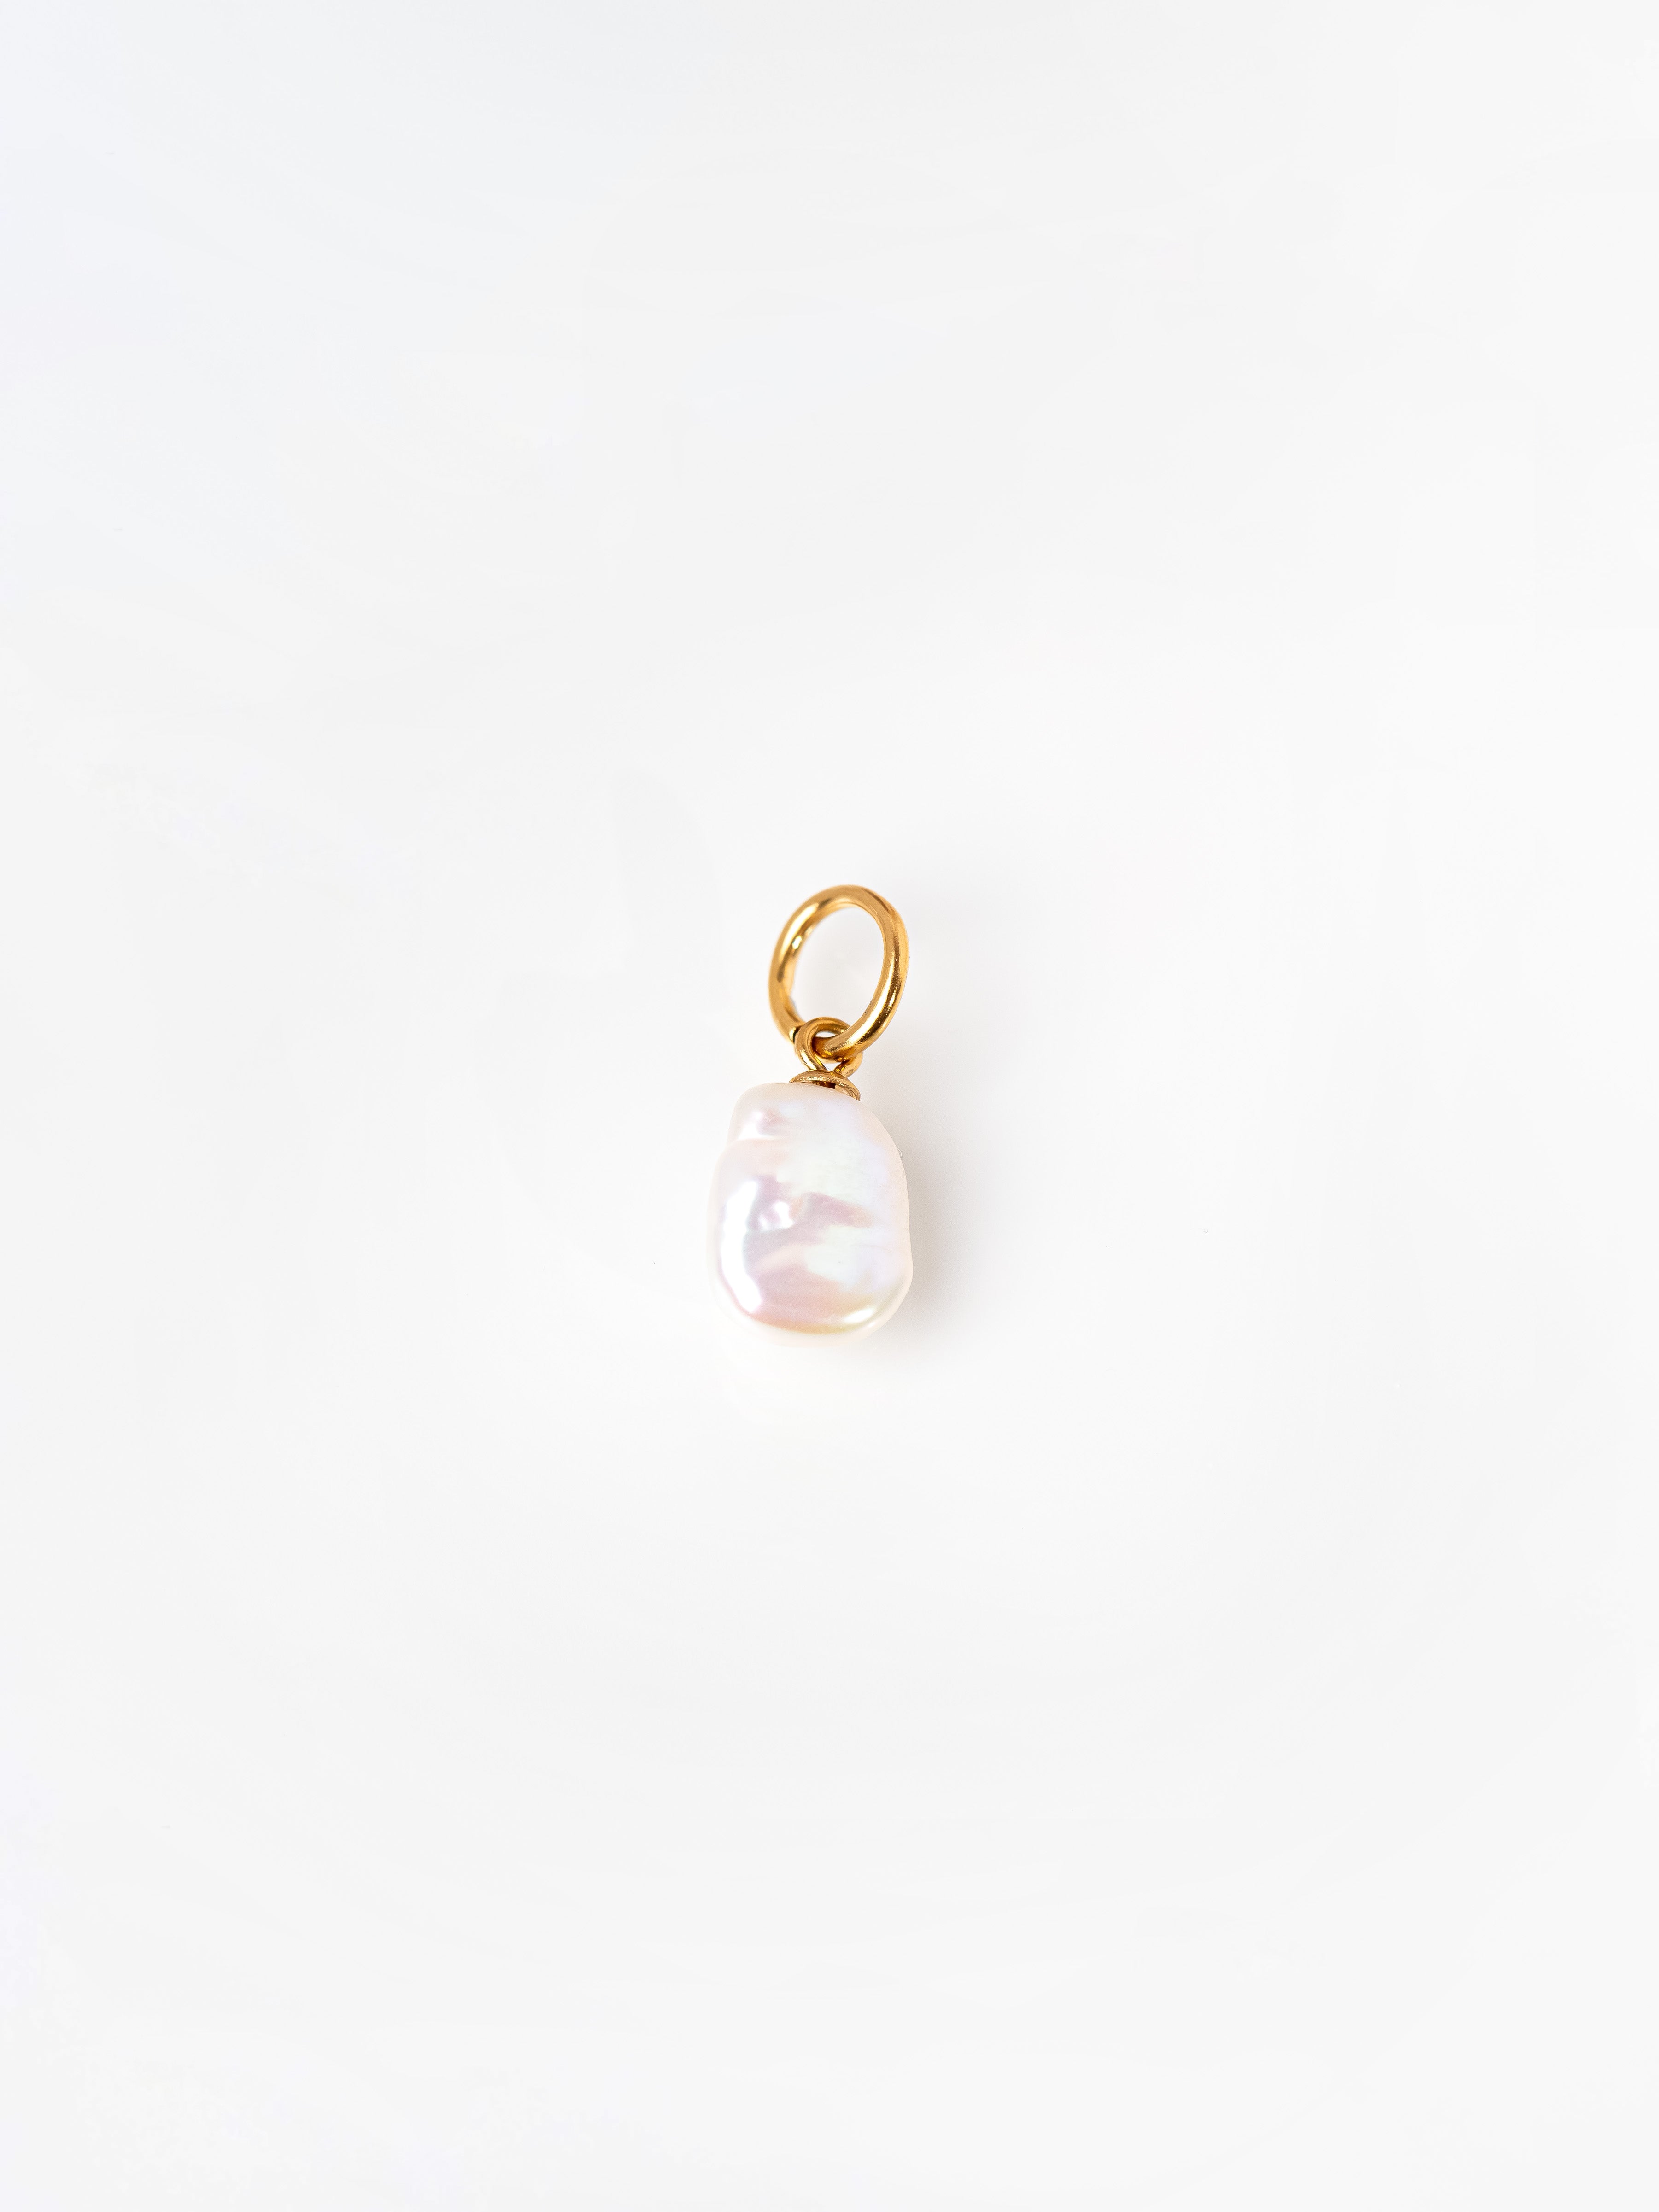 Gold Tiny Baroque Pearl Pendant / Charm